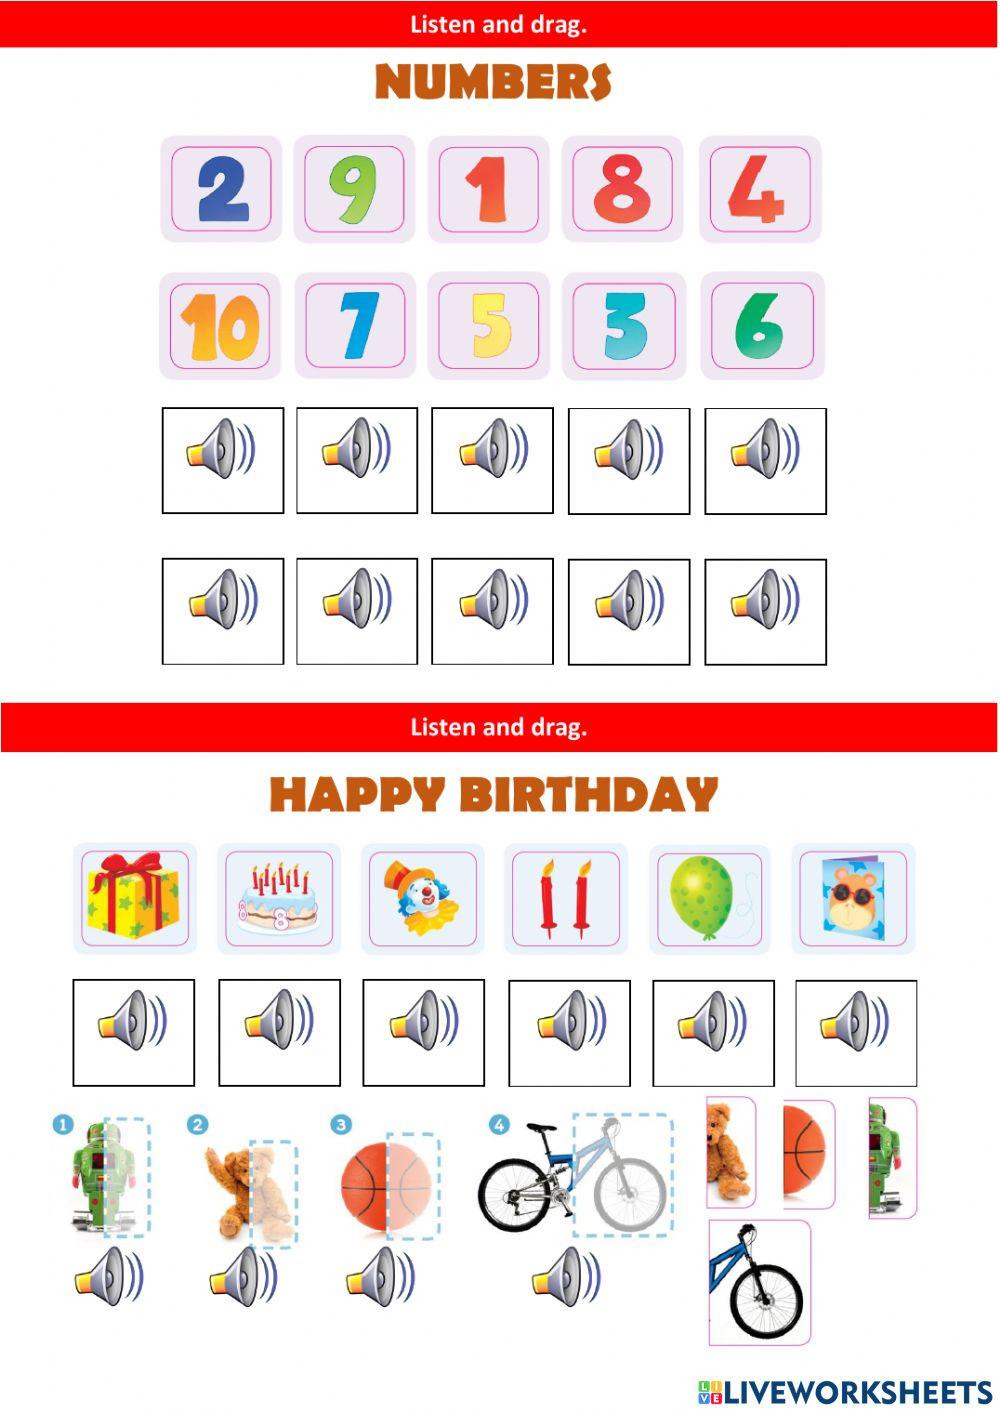 Numbers and Birthday Vocabulary